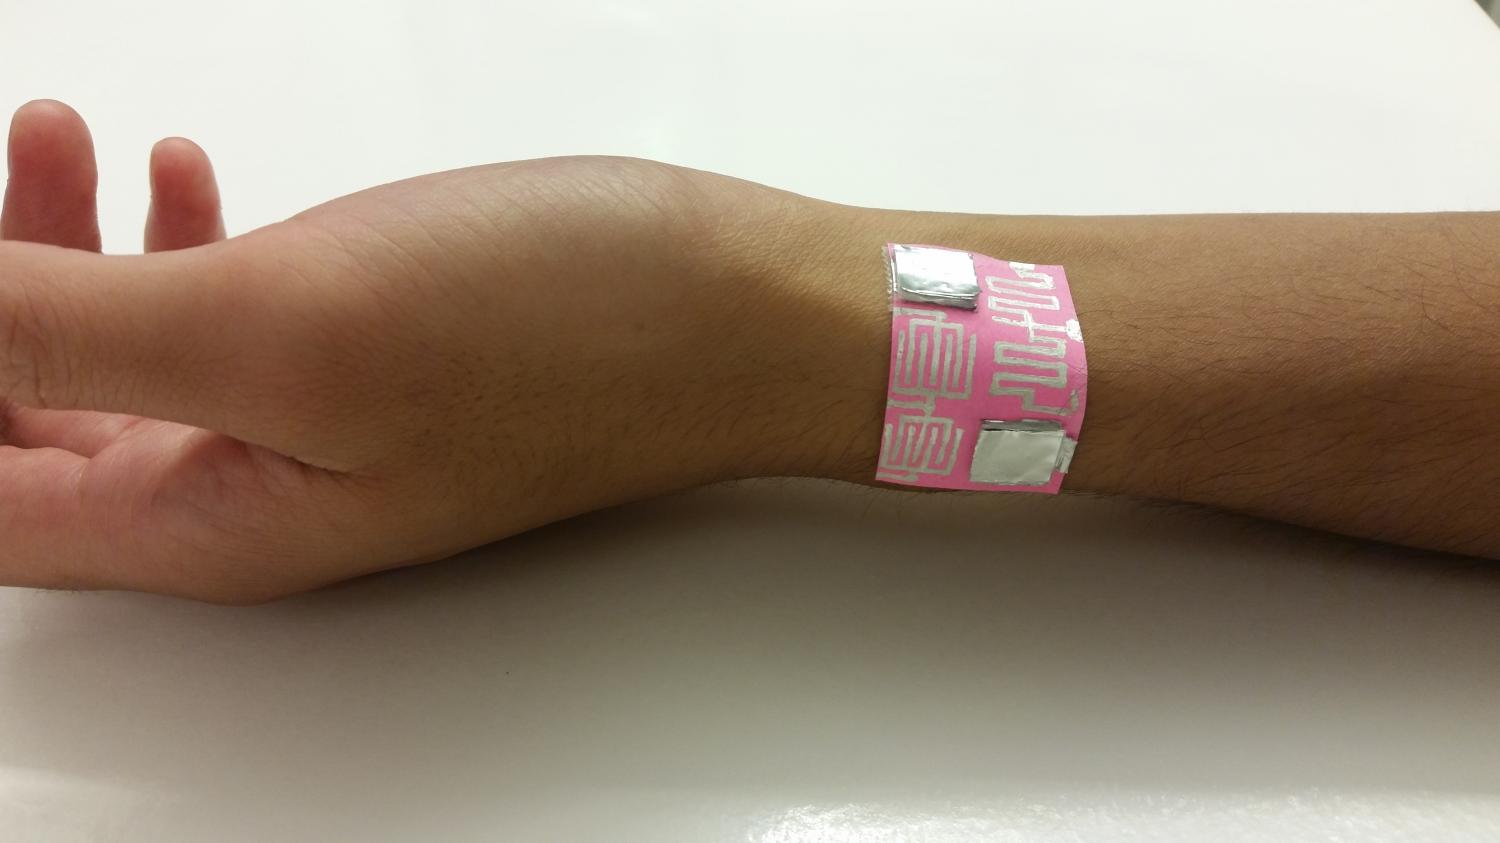 KAUST CEMSE EE MMH LAB FABLAB Wrist Sensor For Health Screening